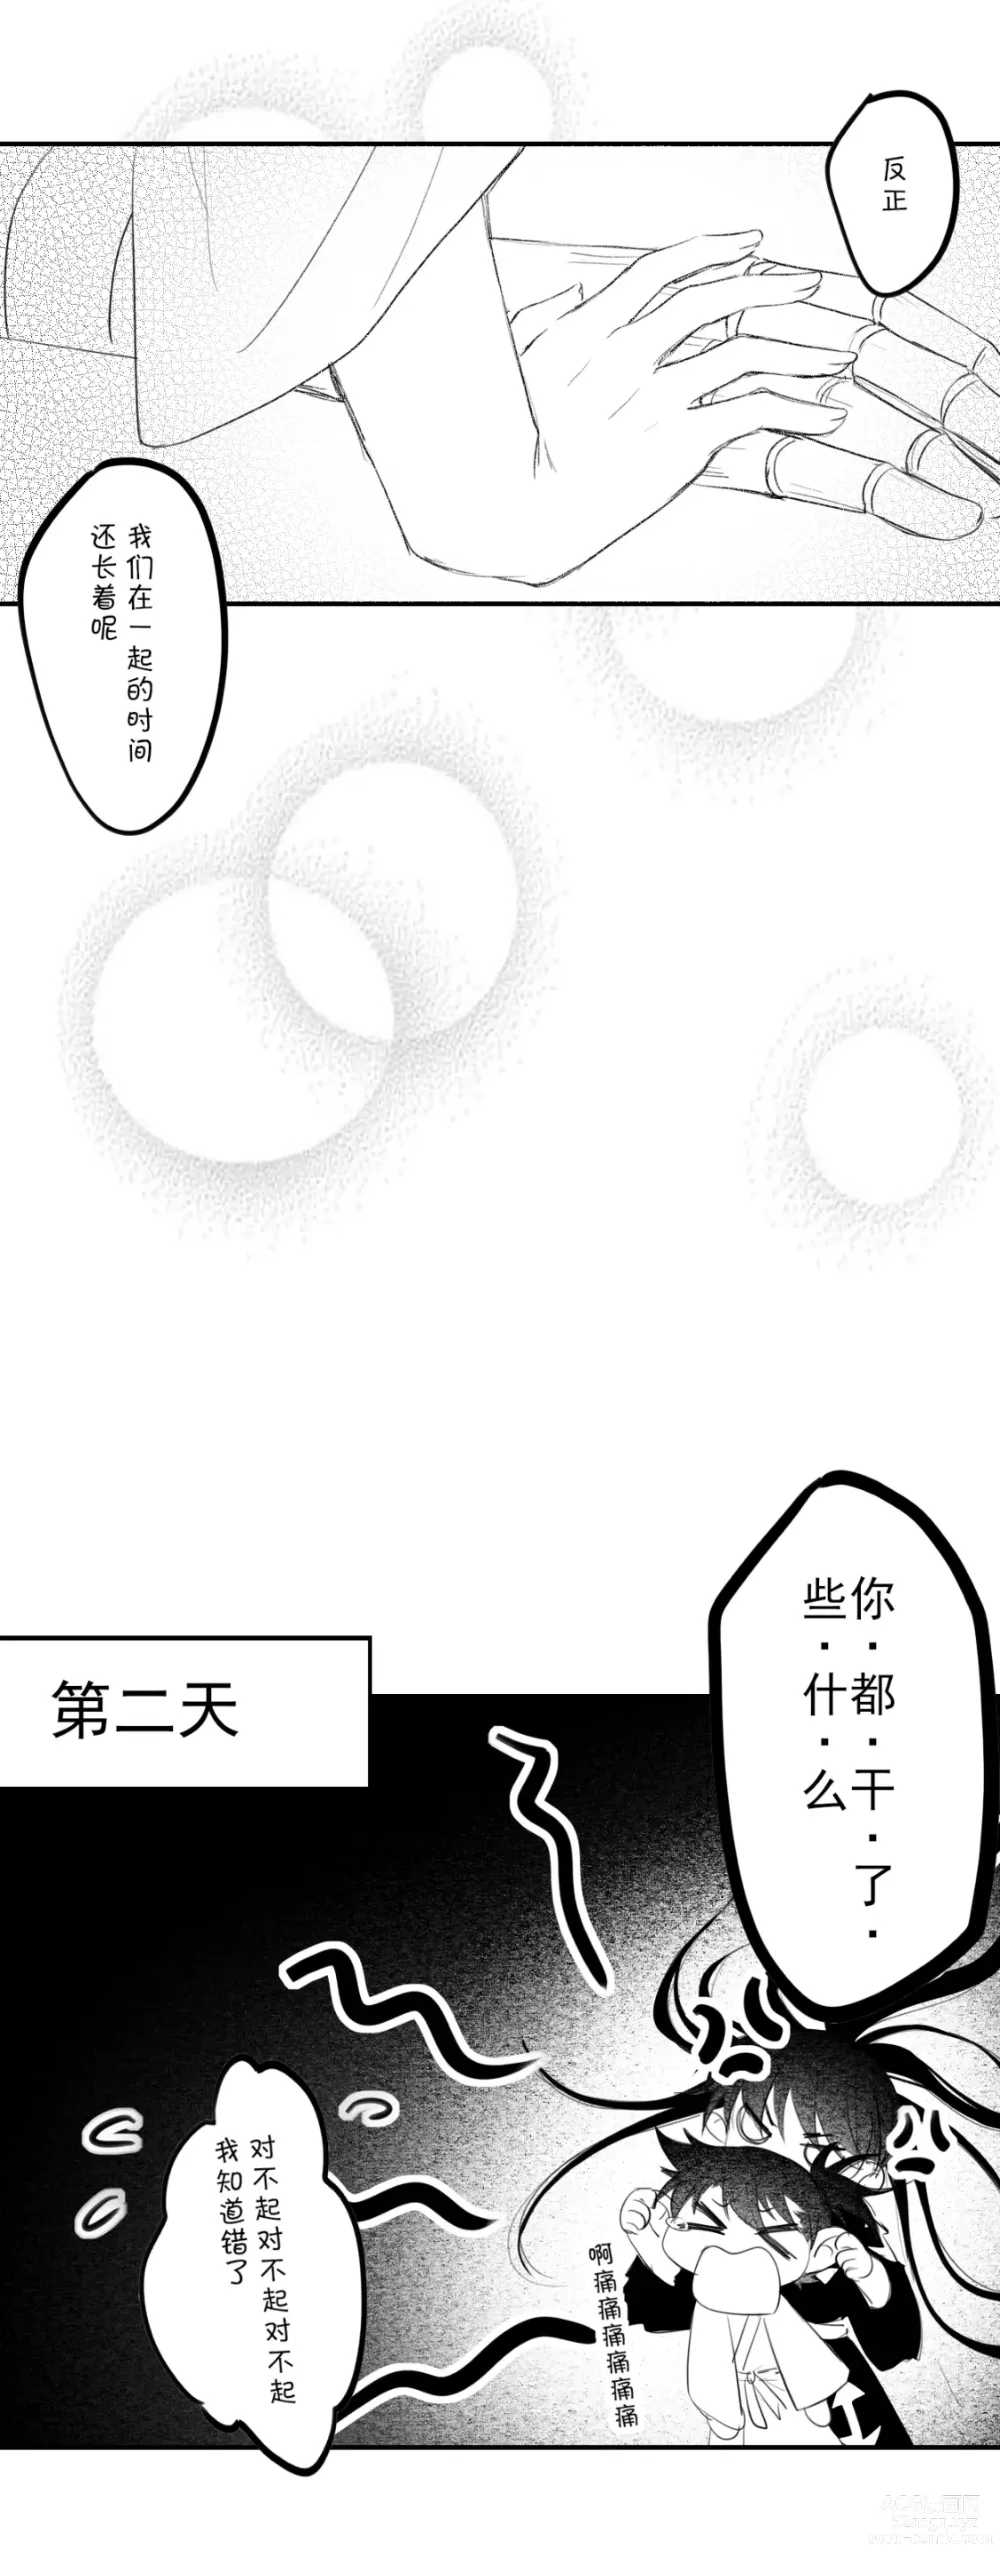 Page 11 of doujinshi -------------